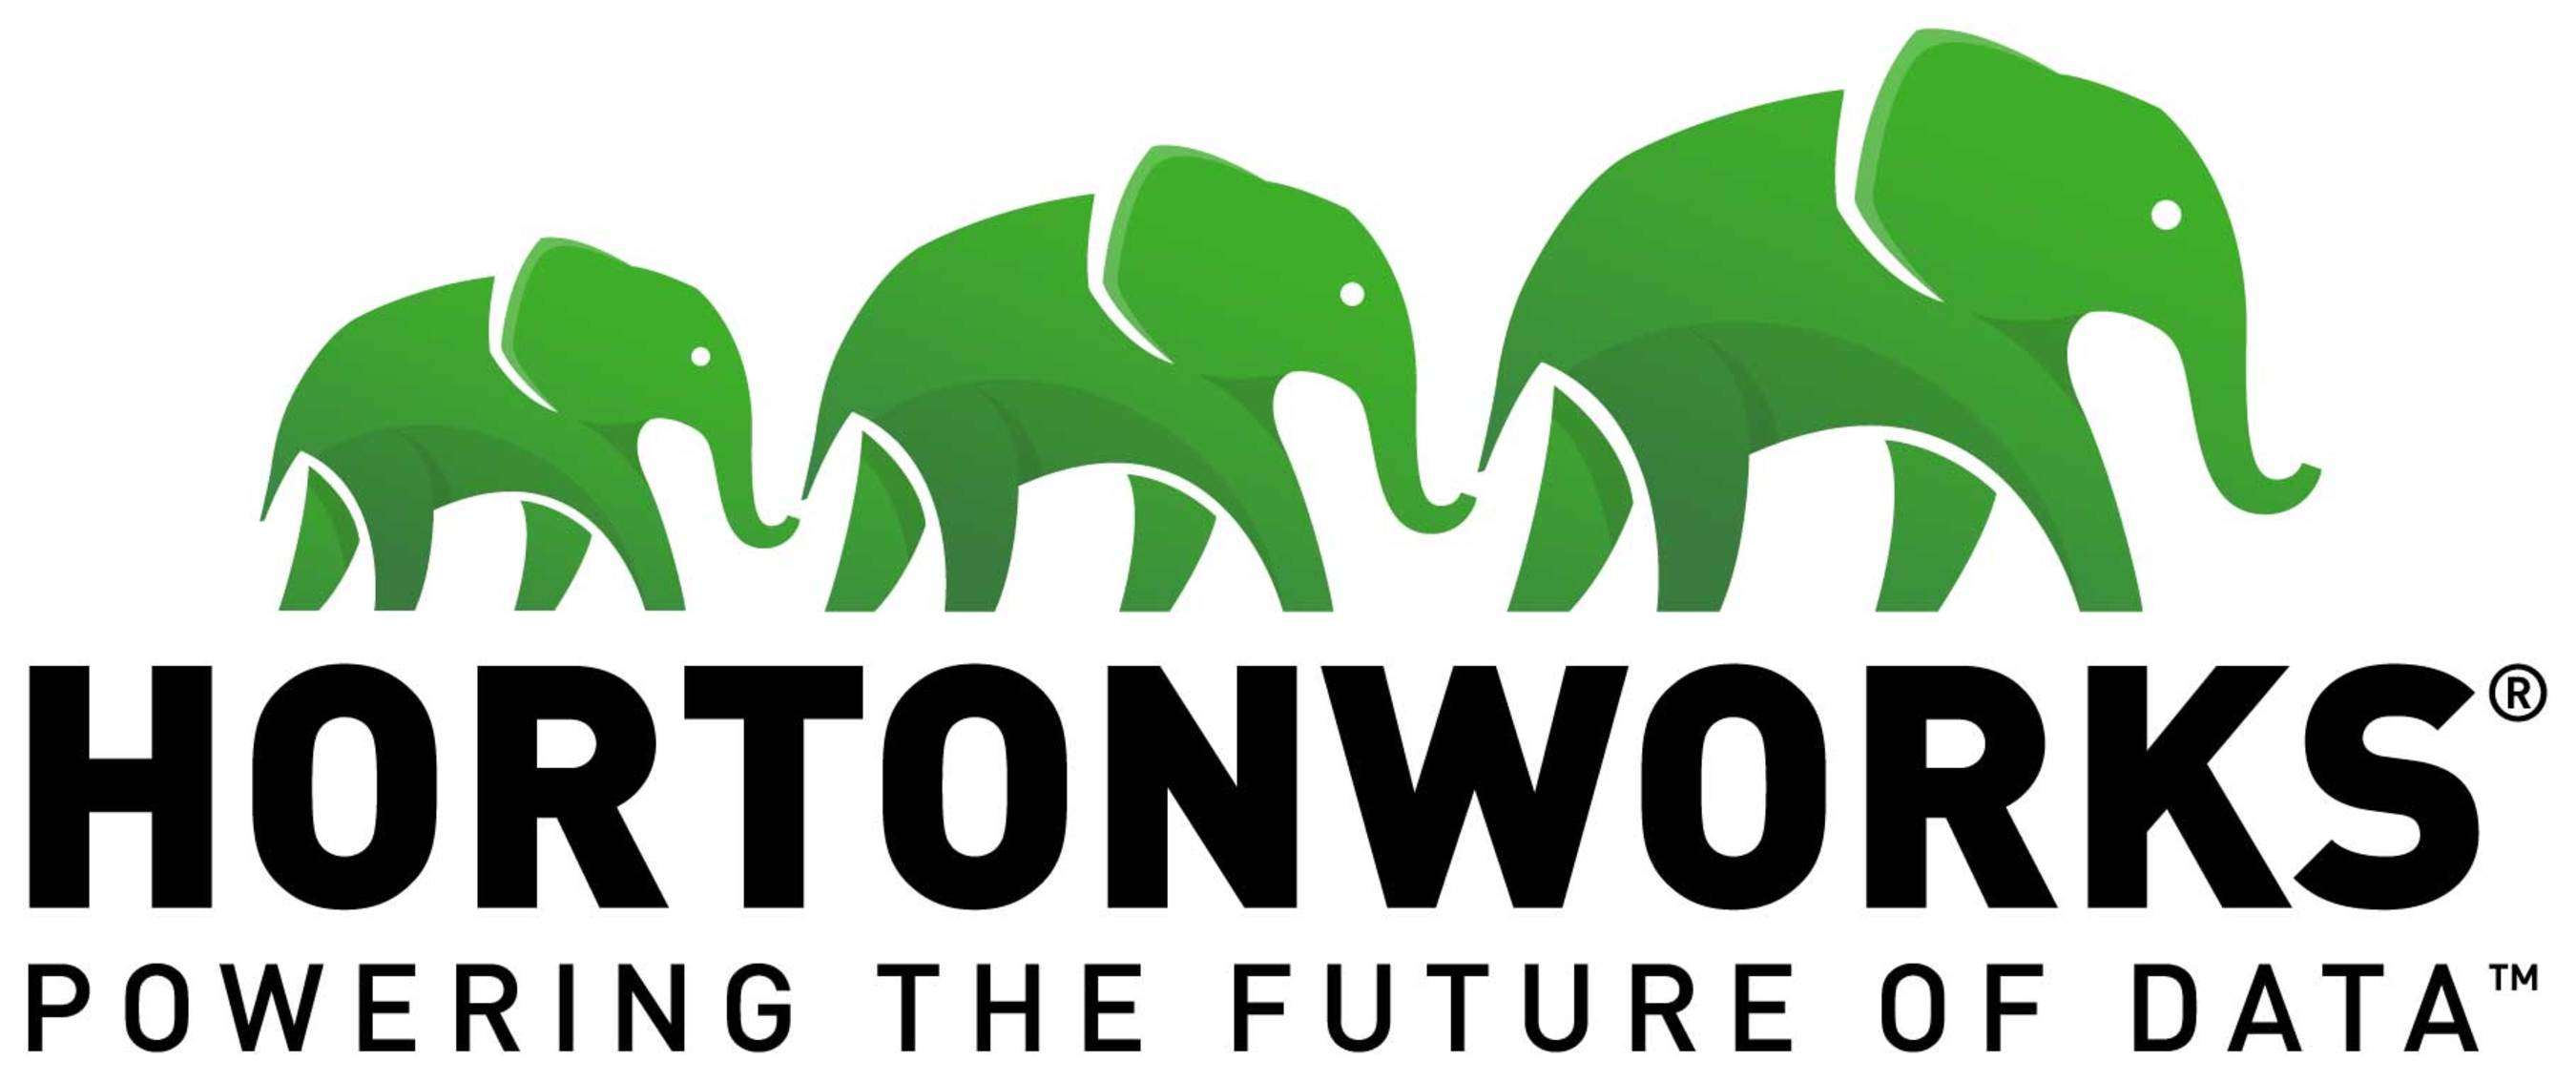 Hortonworks logo. (PRNewsFoto/Hortonworks) (PRNewsFoto/HORTONWORKS)